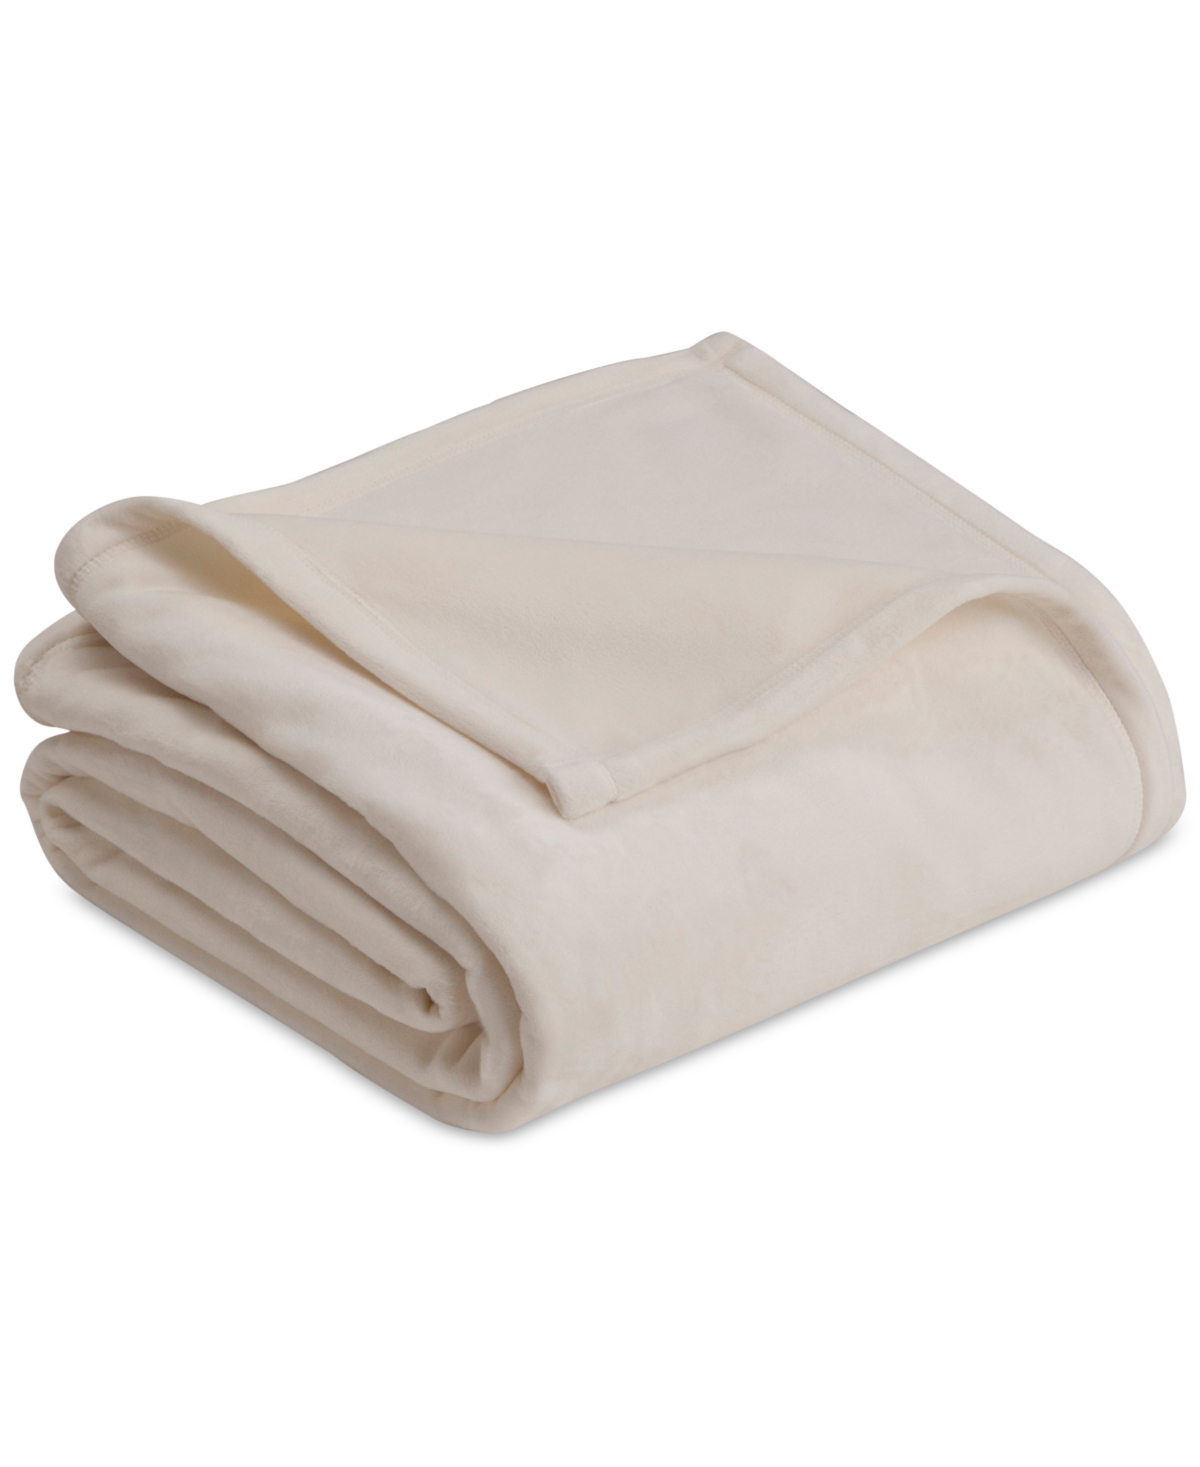 Vellux Plush Knit Twin Blanket Bedding